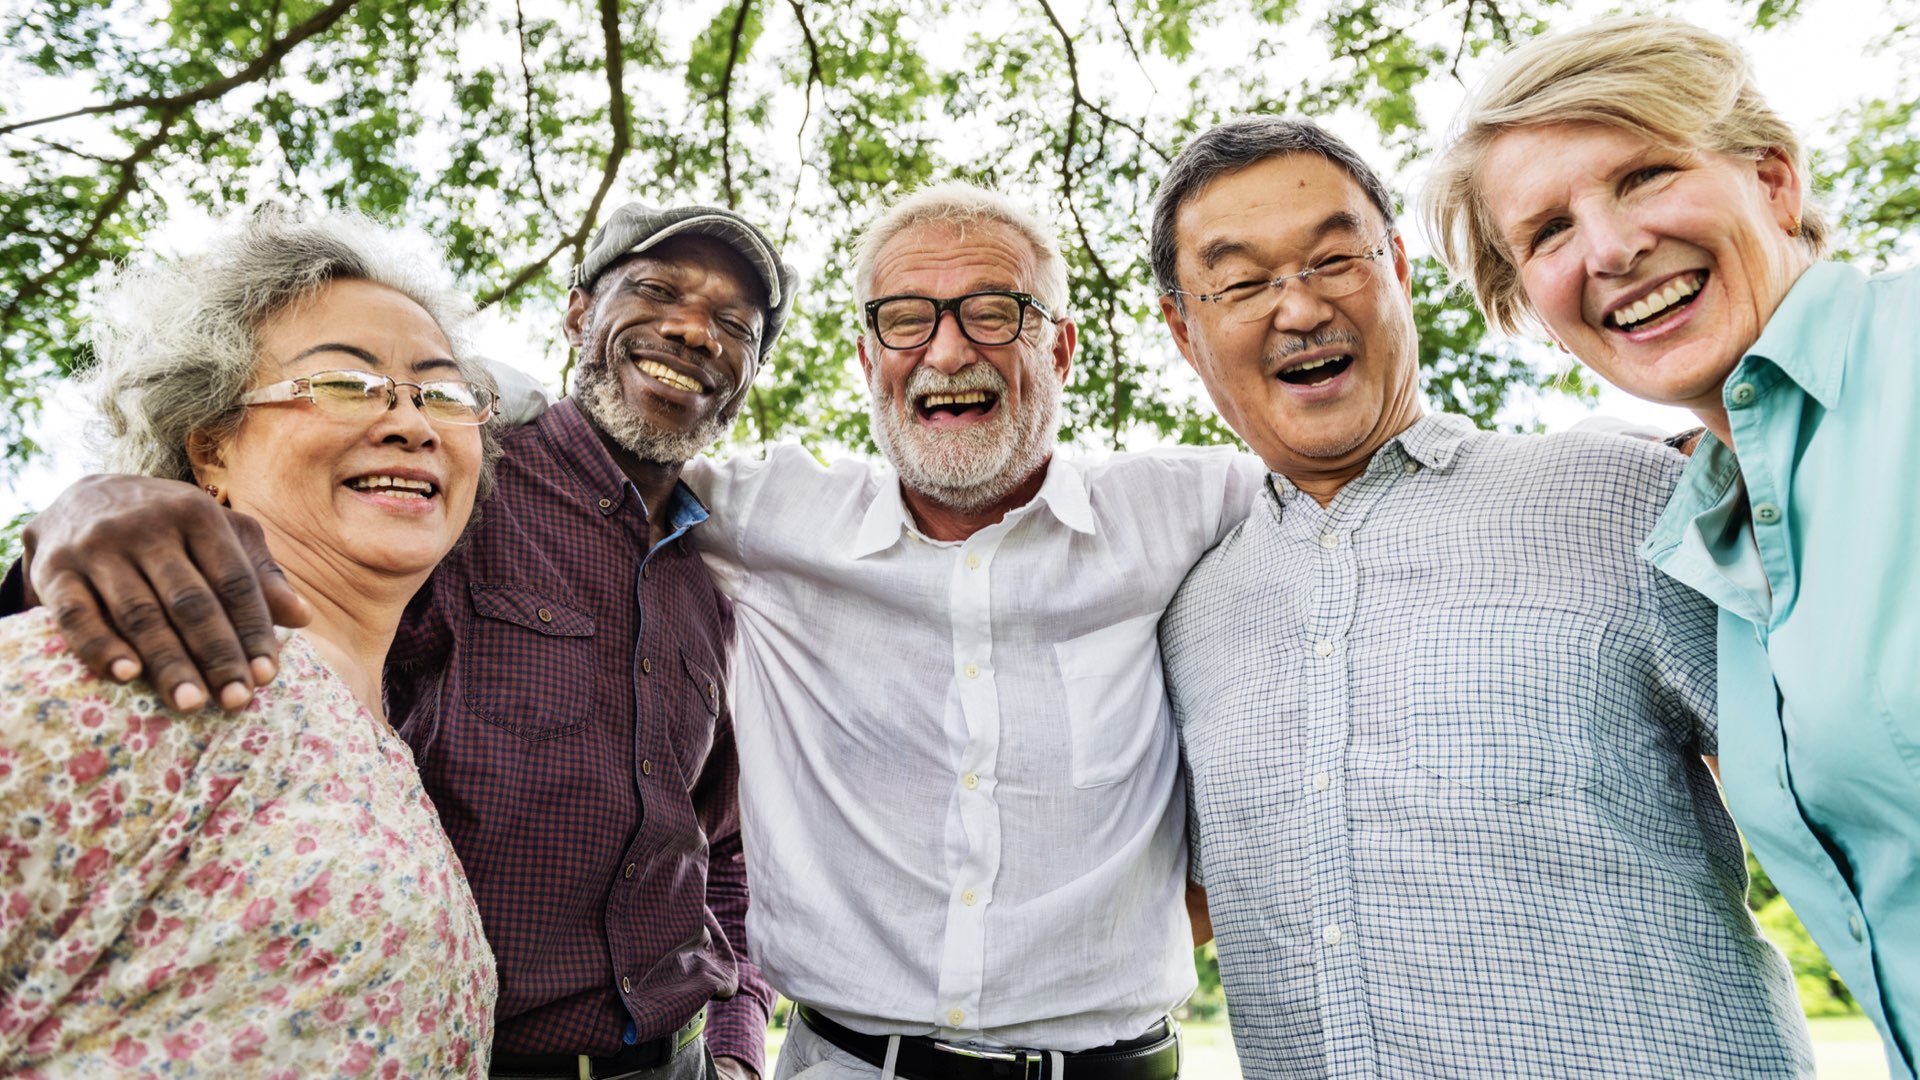 Seniors at Retirement Community in Washington